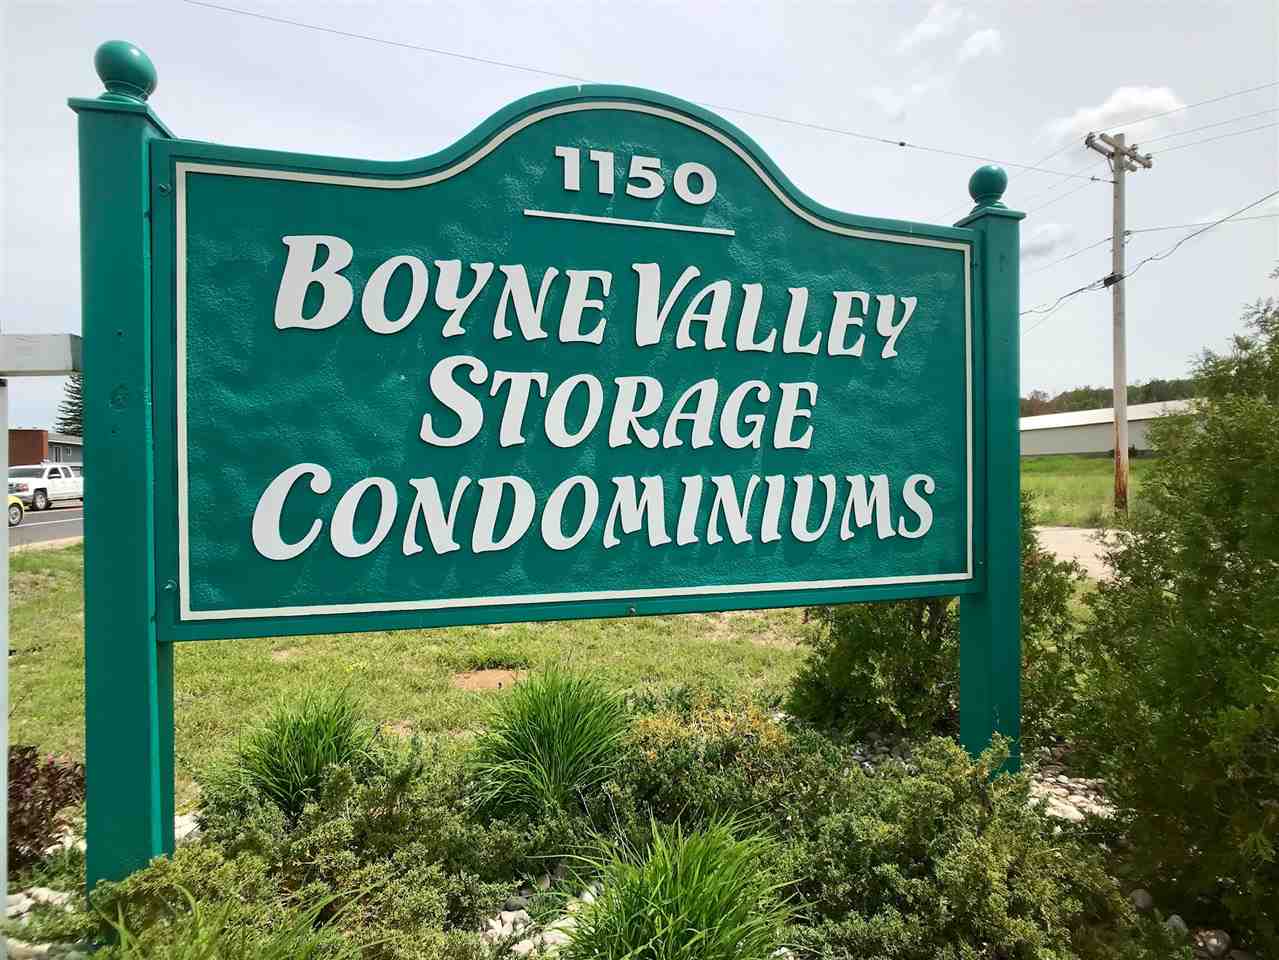 00156 Boyne Valley Storage Drive, Boyne City, MI 49712